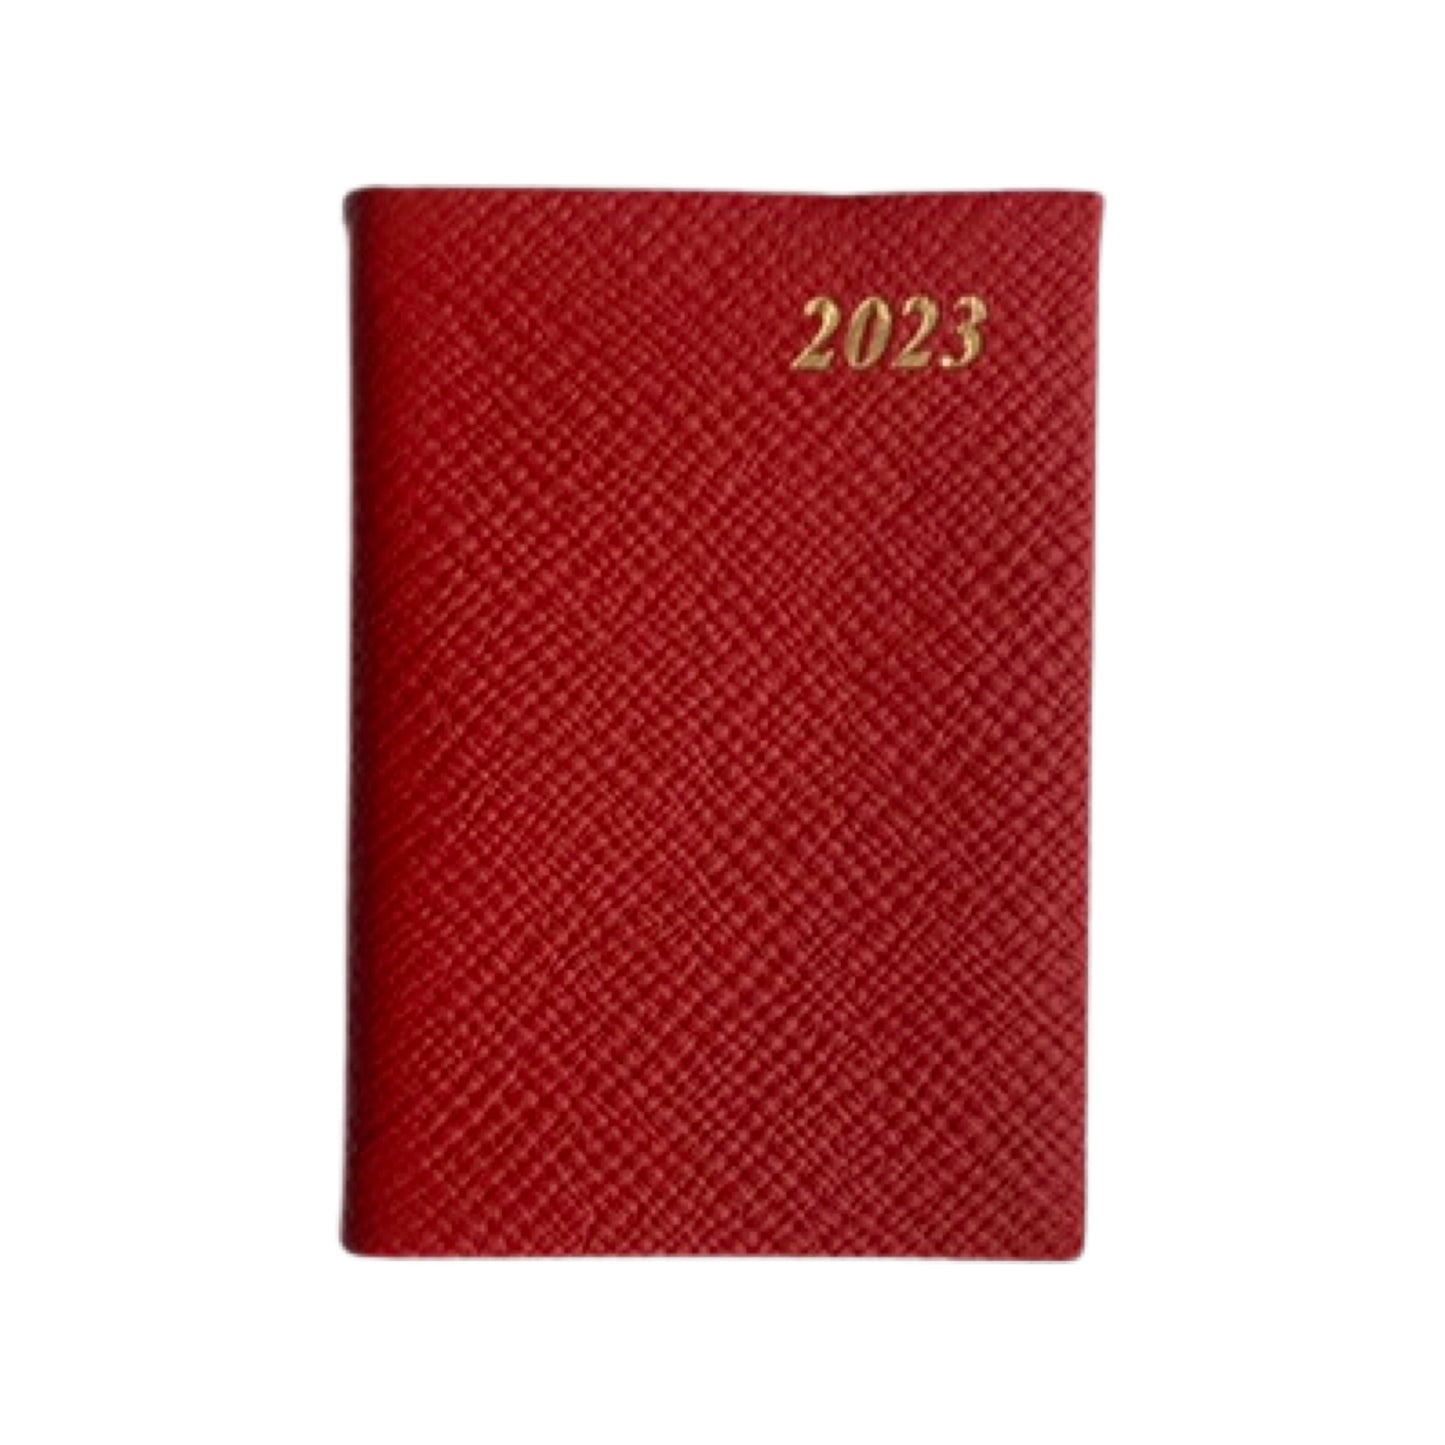 YEAR 2022 CROSSGRAIN Leather Pocket Calendar Book | 5 x 3" | Pencil in Spine | D753LJ